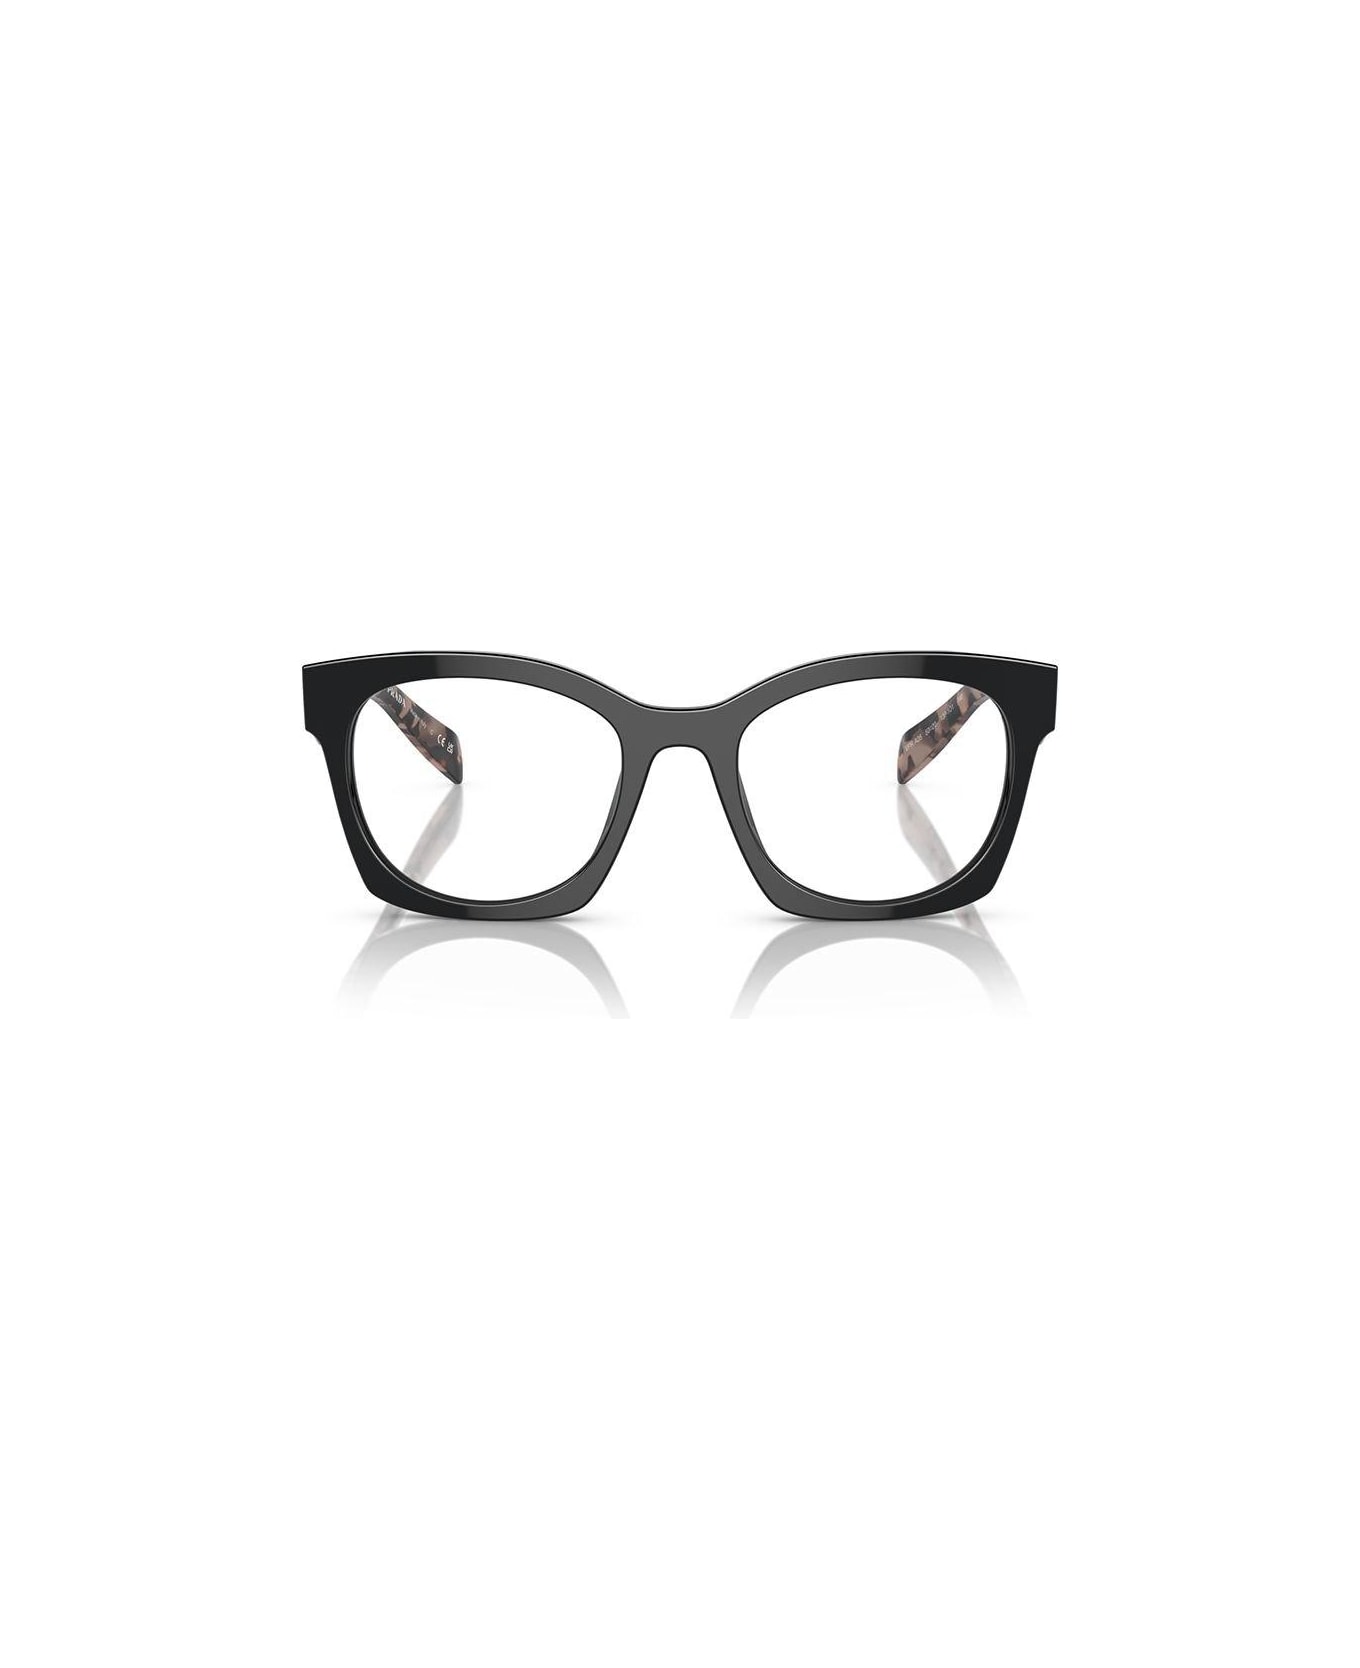 Prada Eyewear D-frame Glasses - 13P1O1